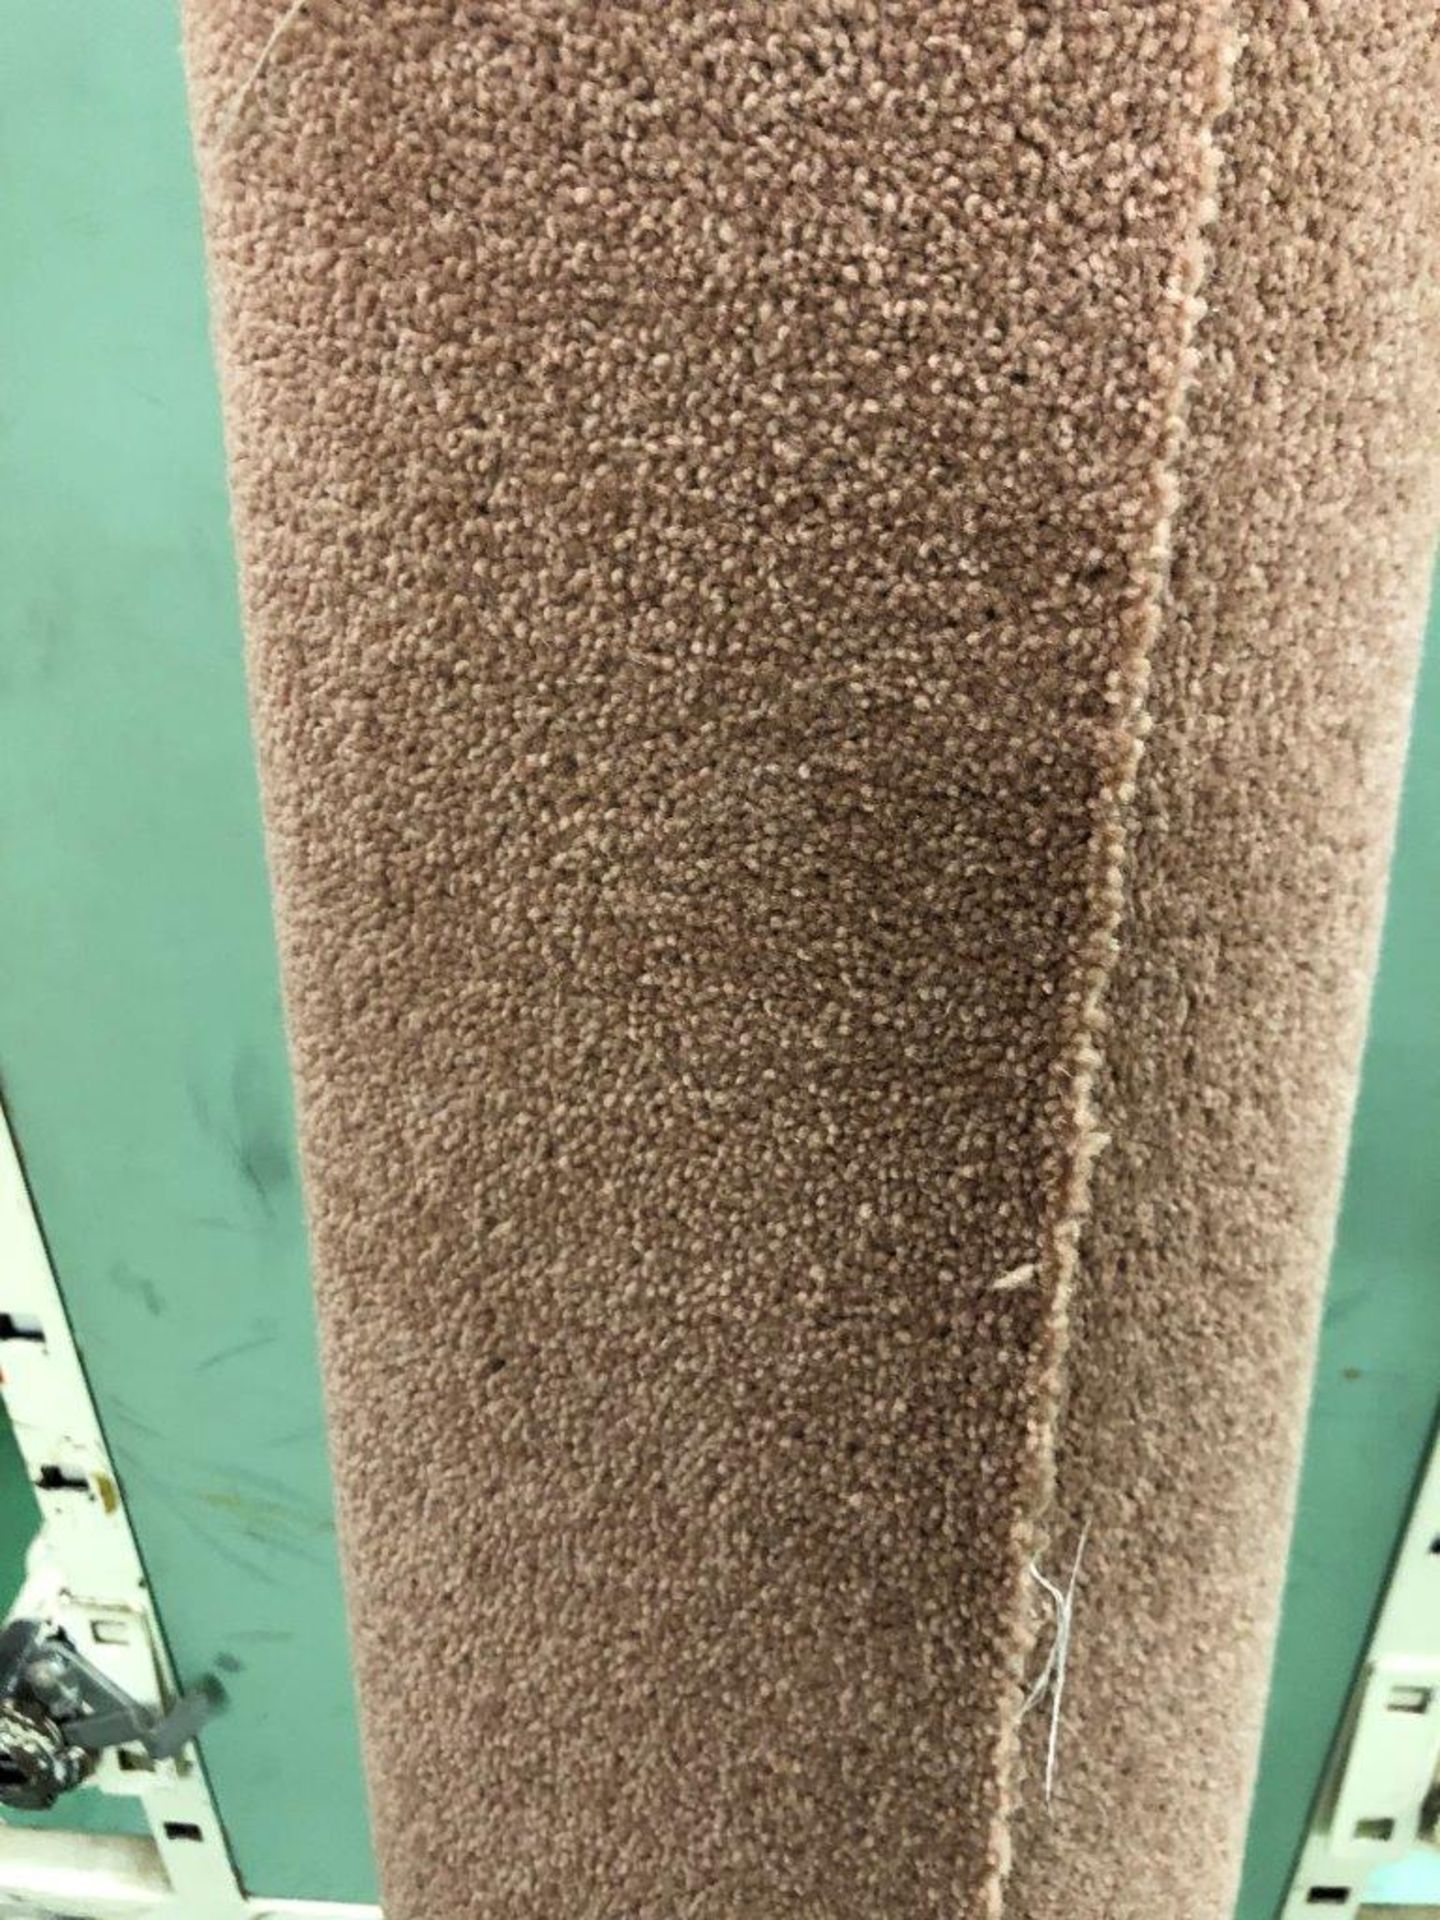 1 x Ryalux Carpet End Roll - Brown 2.2x1.7m2 - Image 3 of 3